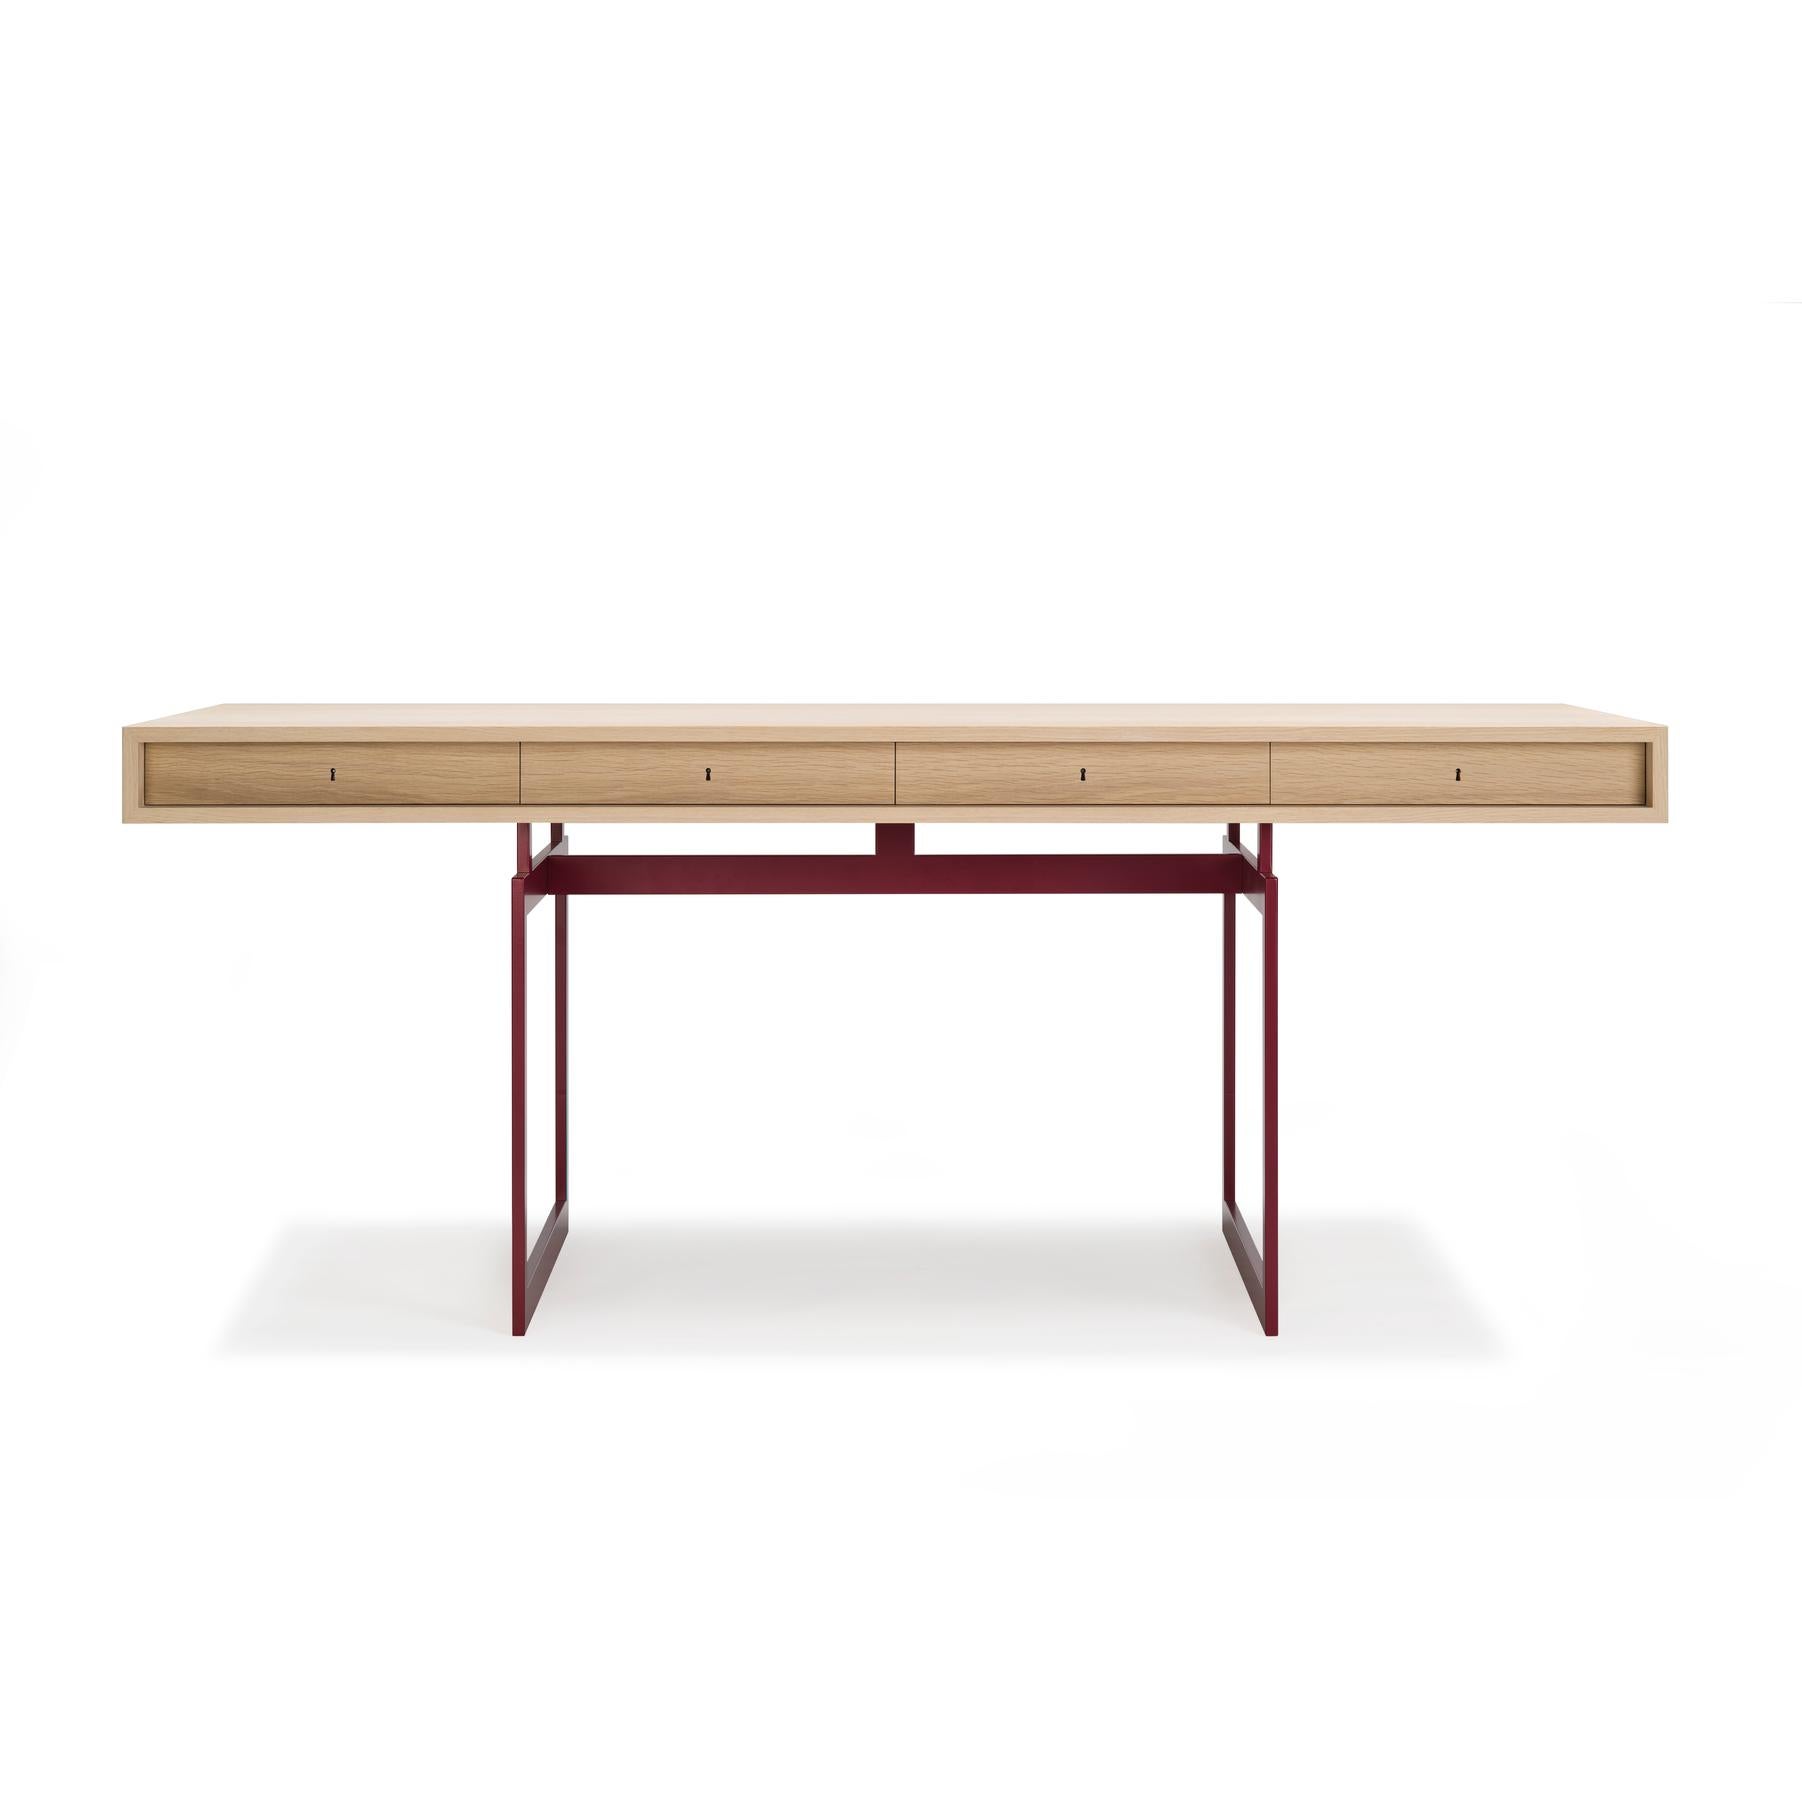 Mid-Century Modern Bodil Kjær Office Desk Table, Wood and Steel by Karakter For Sale